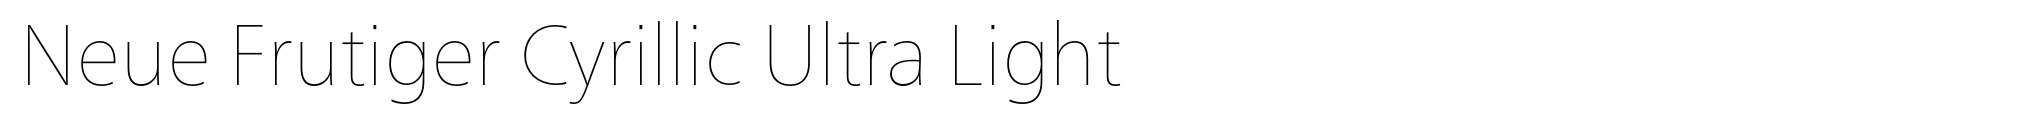 Neue Frutiger Cyrillic Ultra Light image